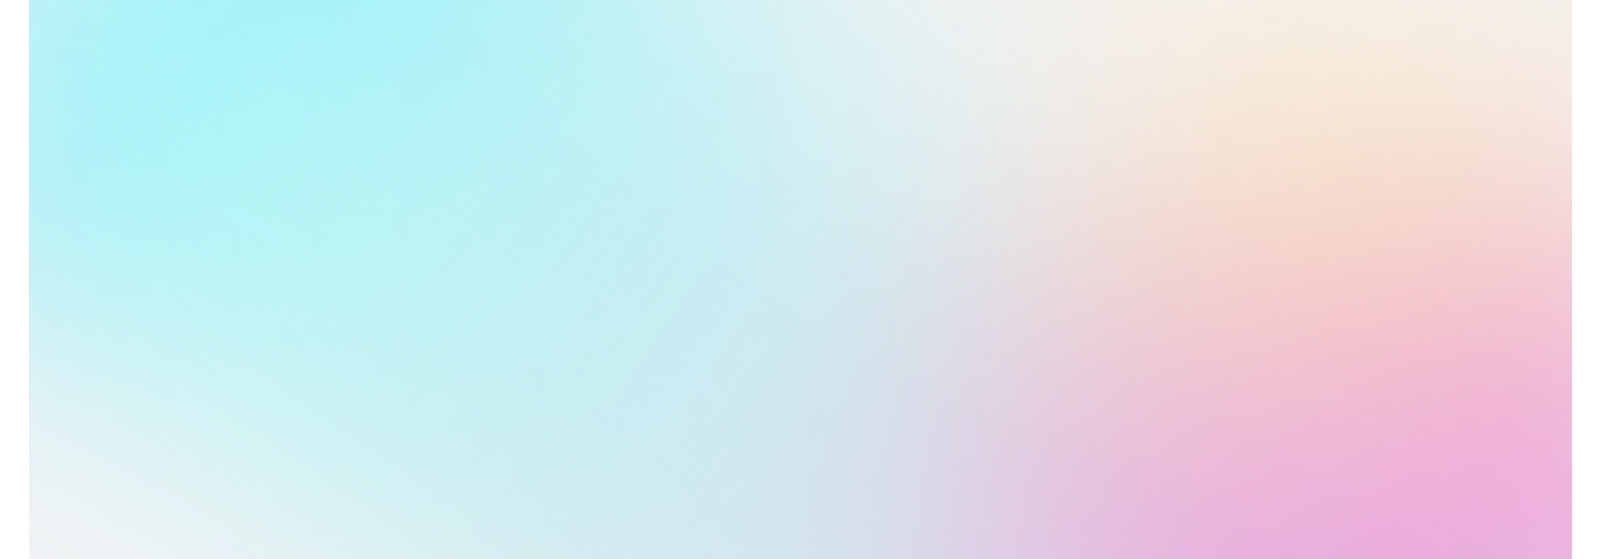 A light blue, light orange and pink gradient